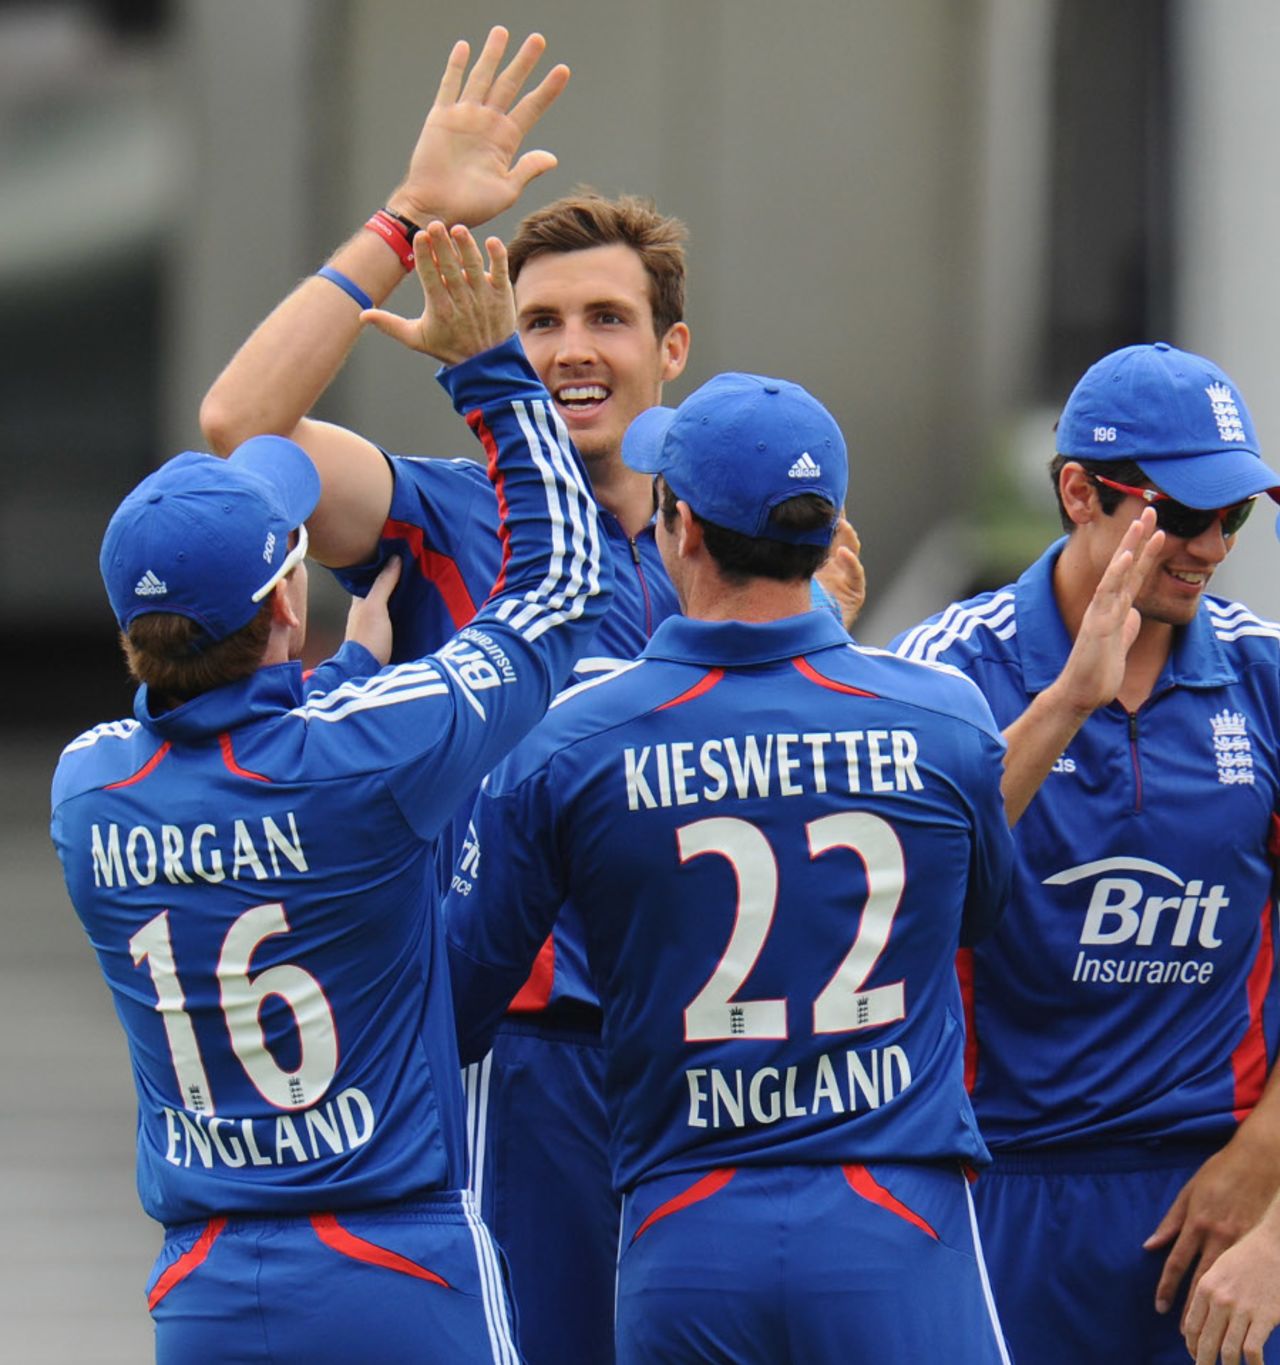 Steven Finn struck early to remove David Warner, England v Australia, 2nd ODI, The Oval, July 1, 2012